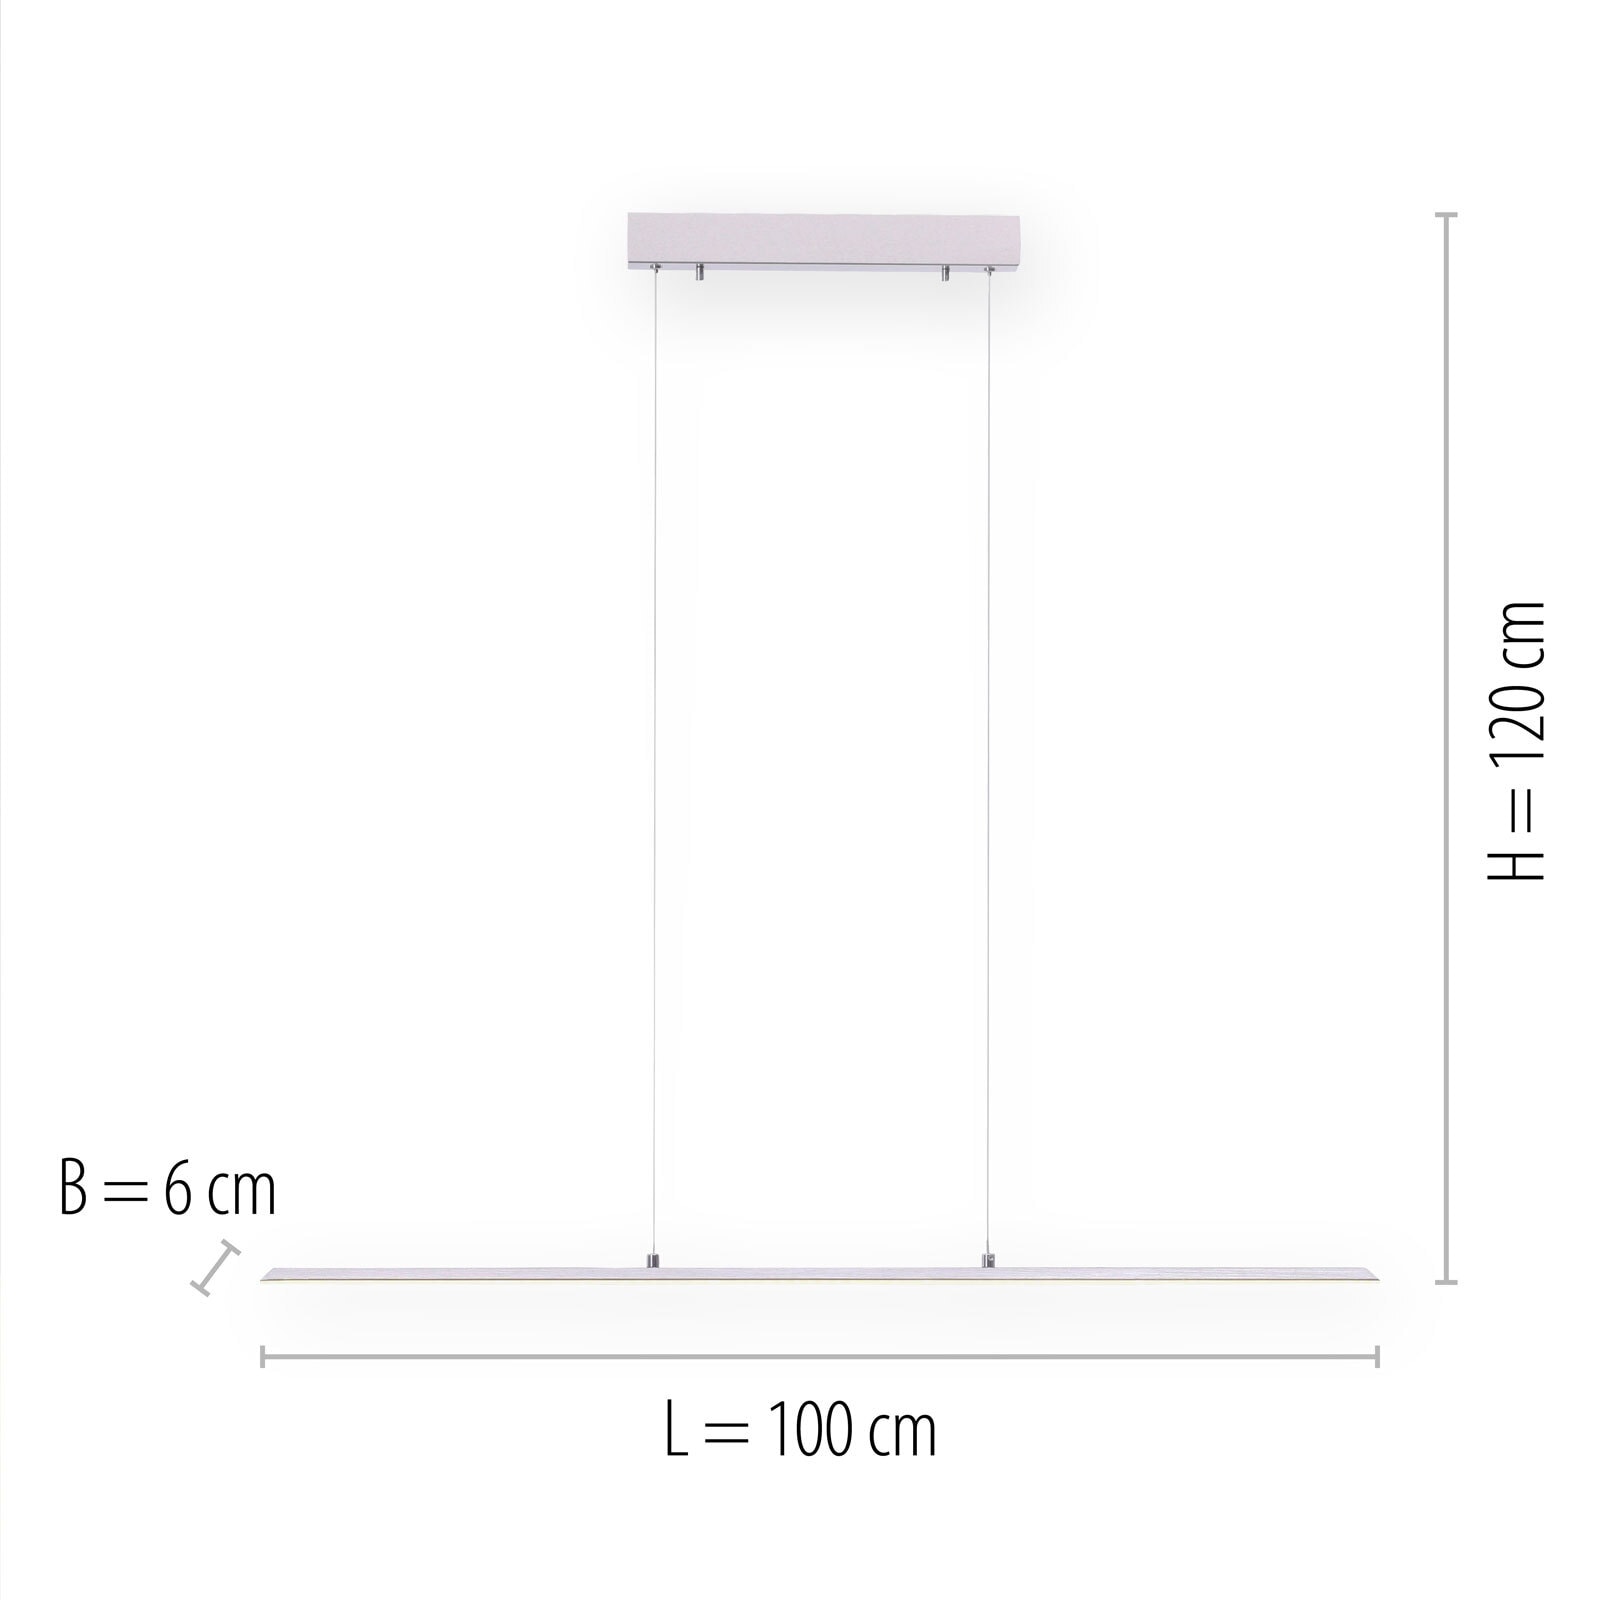 Paul Neuhaus LED Balkenpendel PURE-LITE 100 cm stahlfarbig